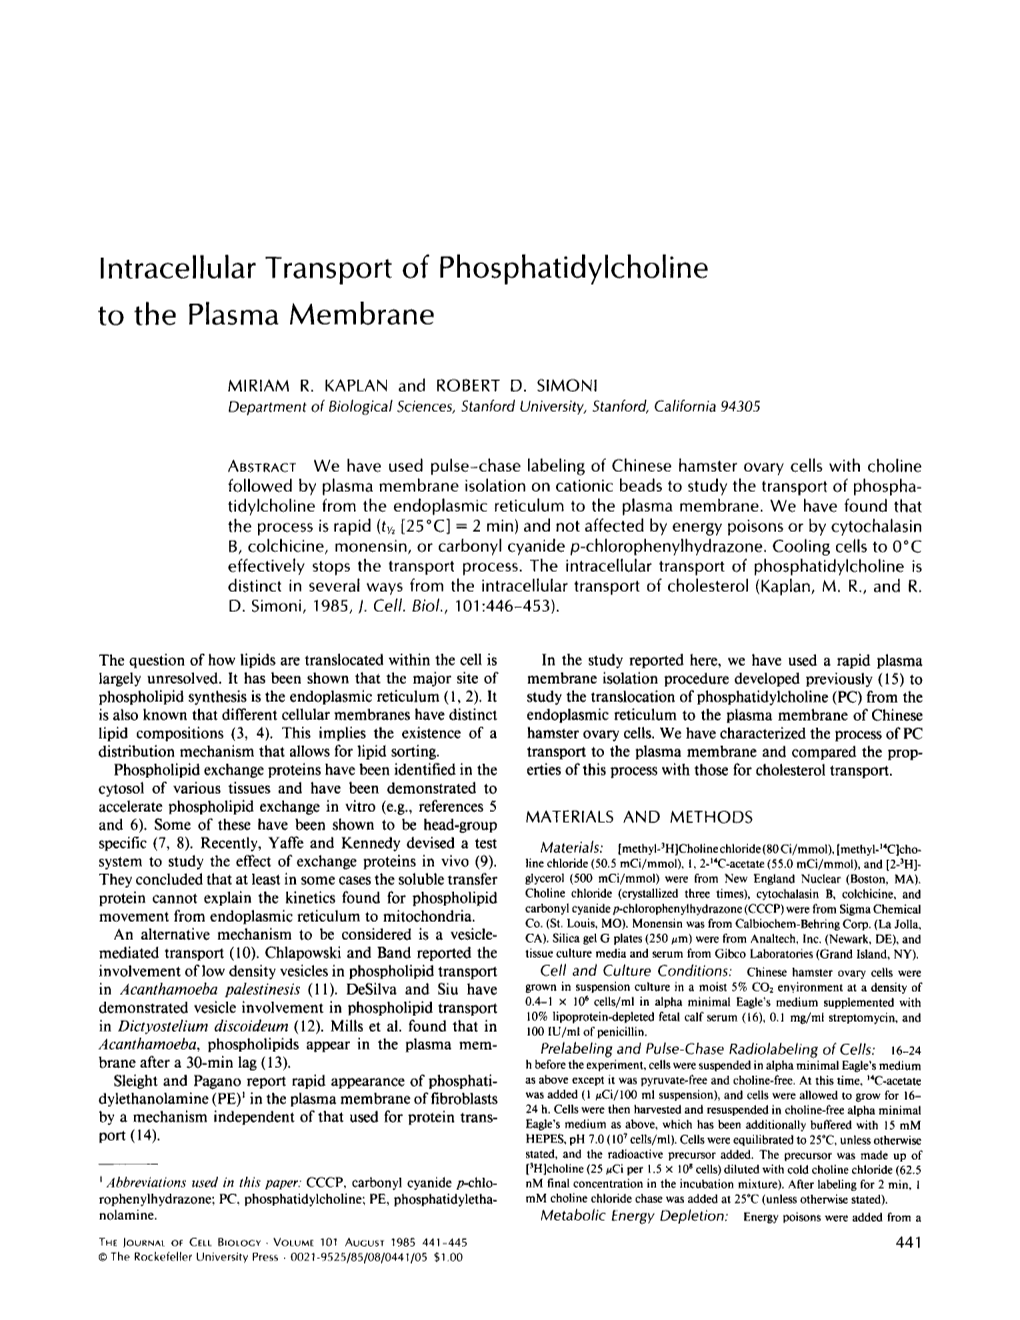 Intracellular Transport of Phosphatidylcholine to the Plasma Membrane